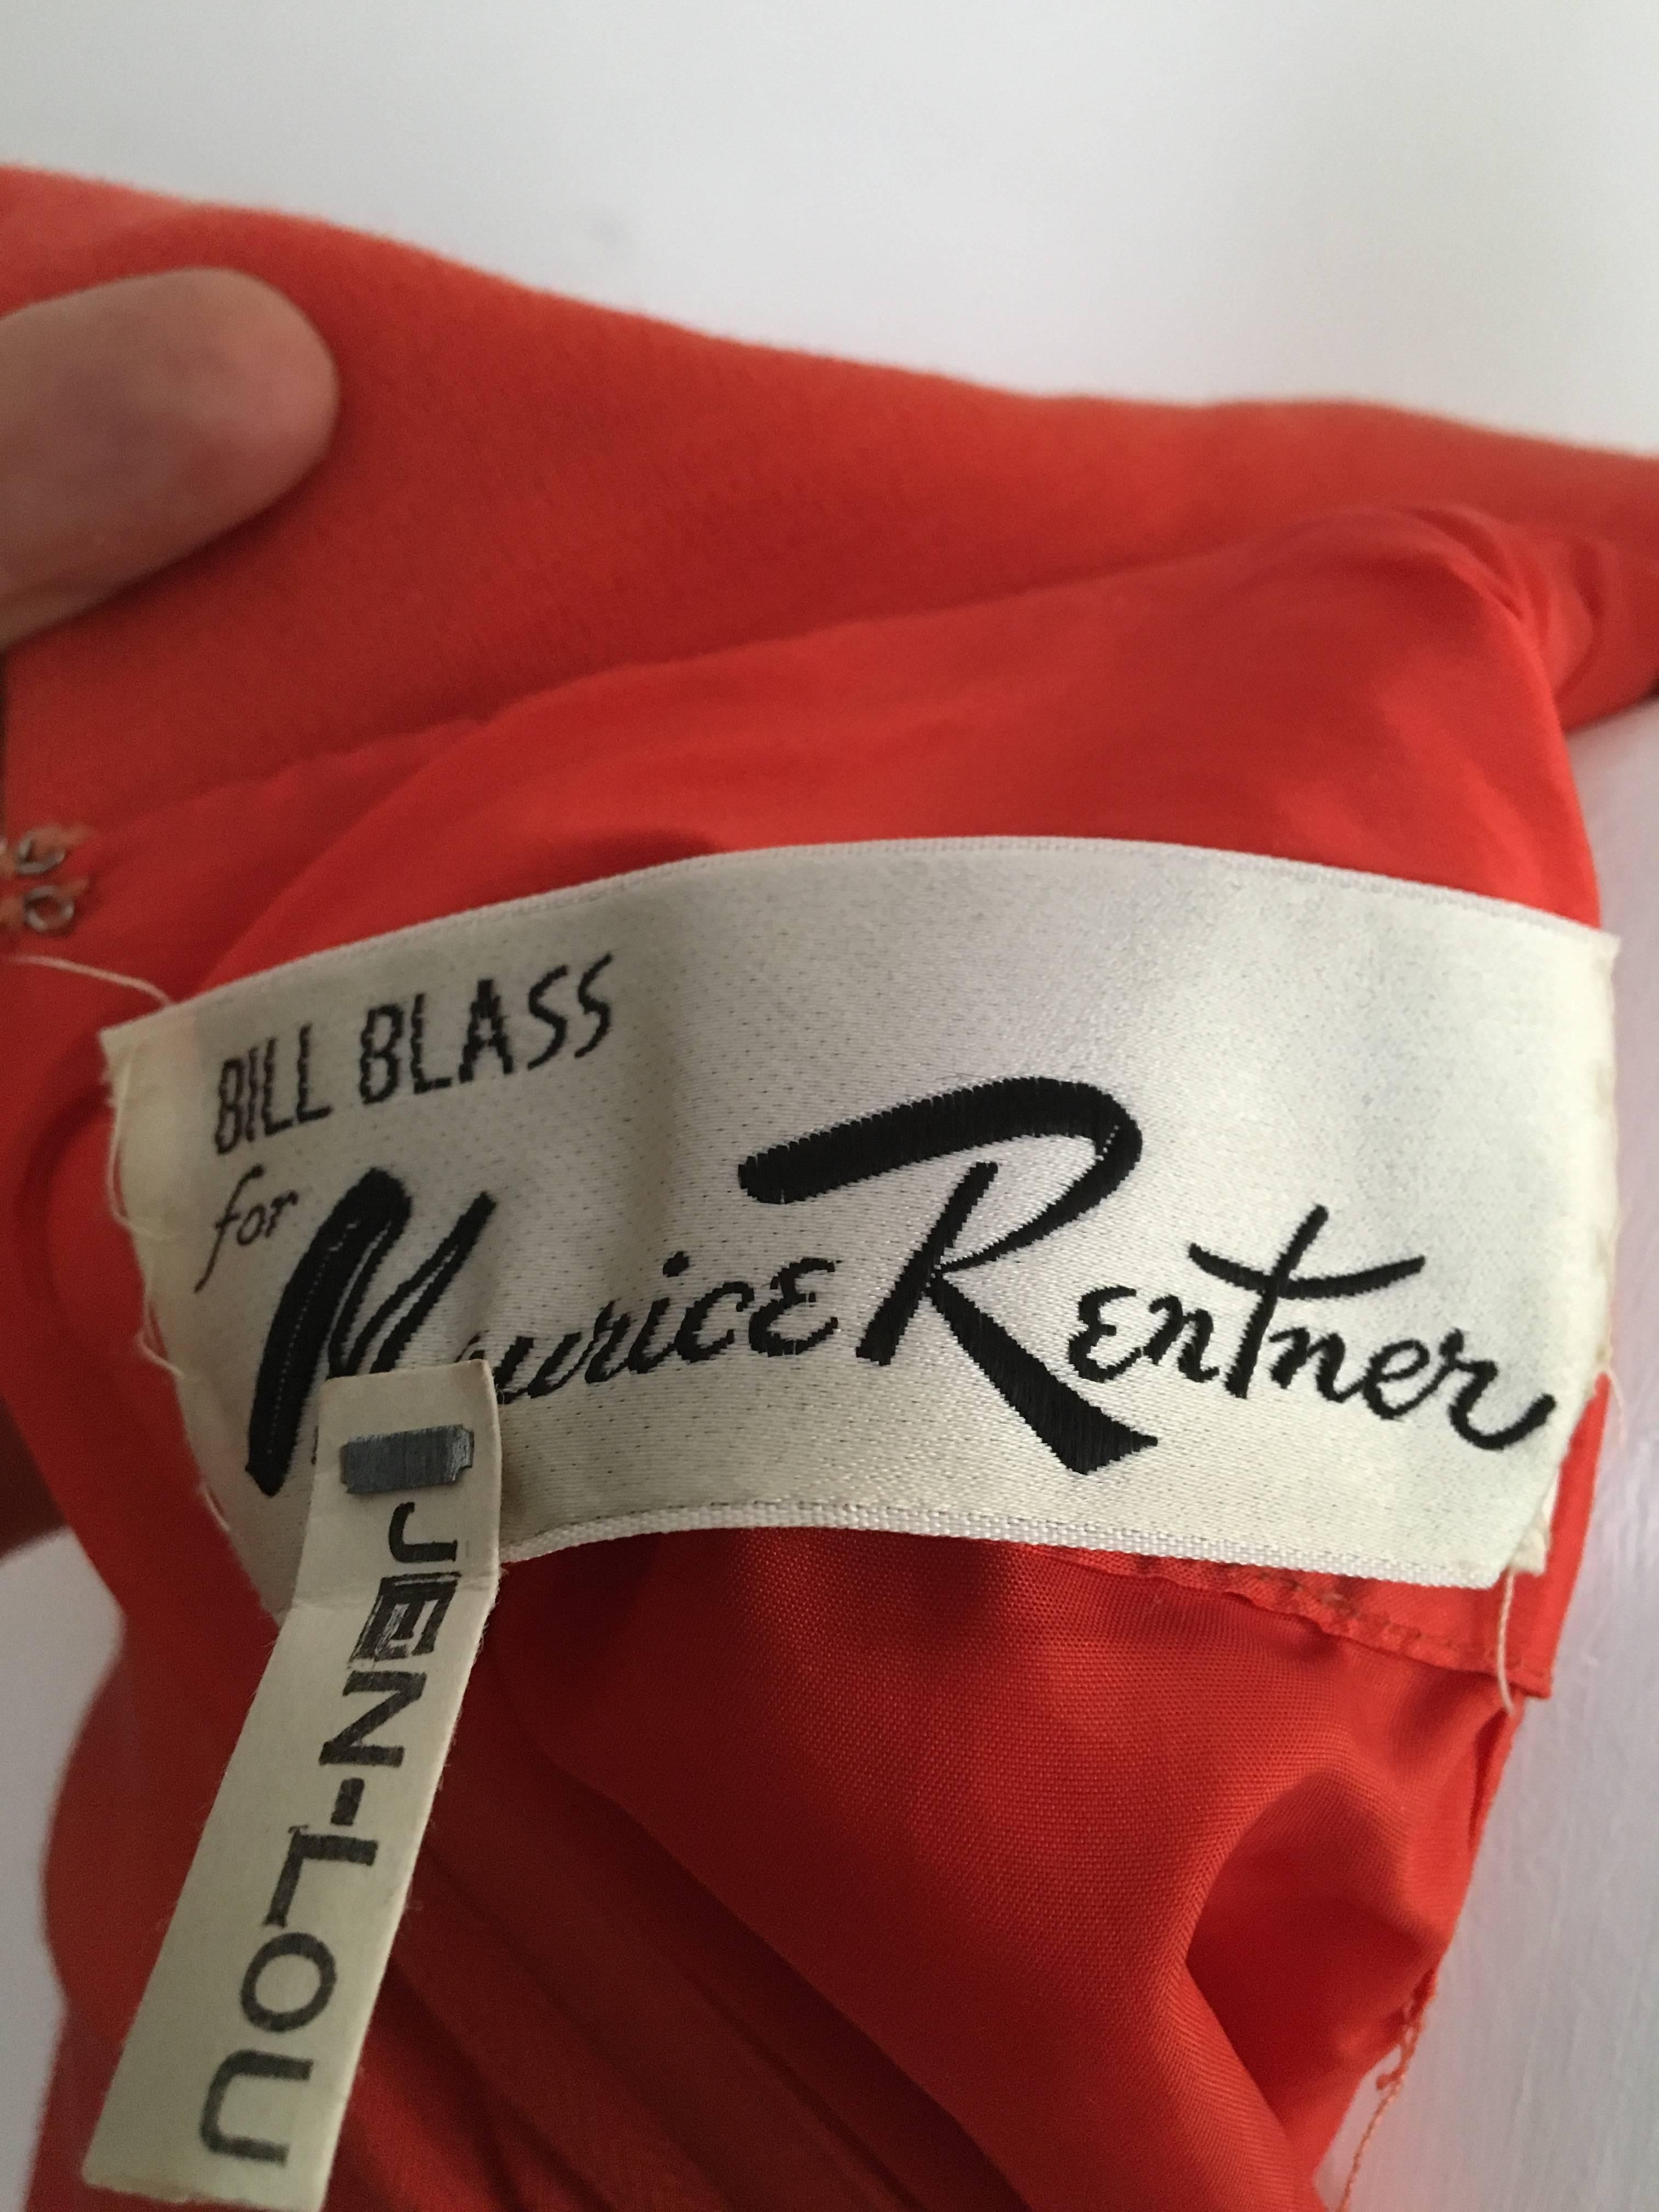 Bill Blass for Maurice Rentner 1960s Orange Wool Knit Dress Size 6. 3